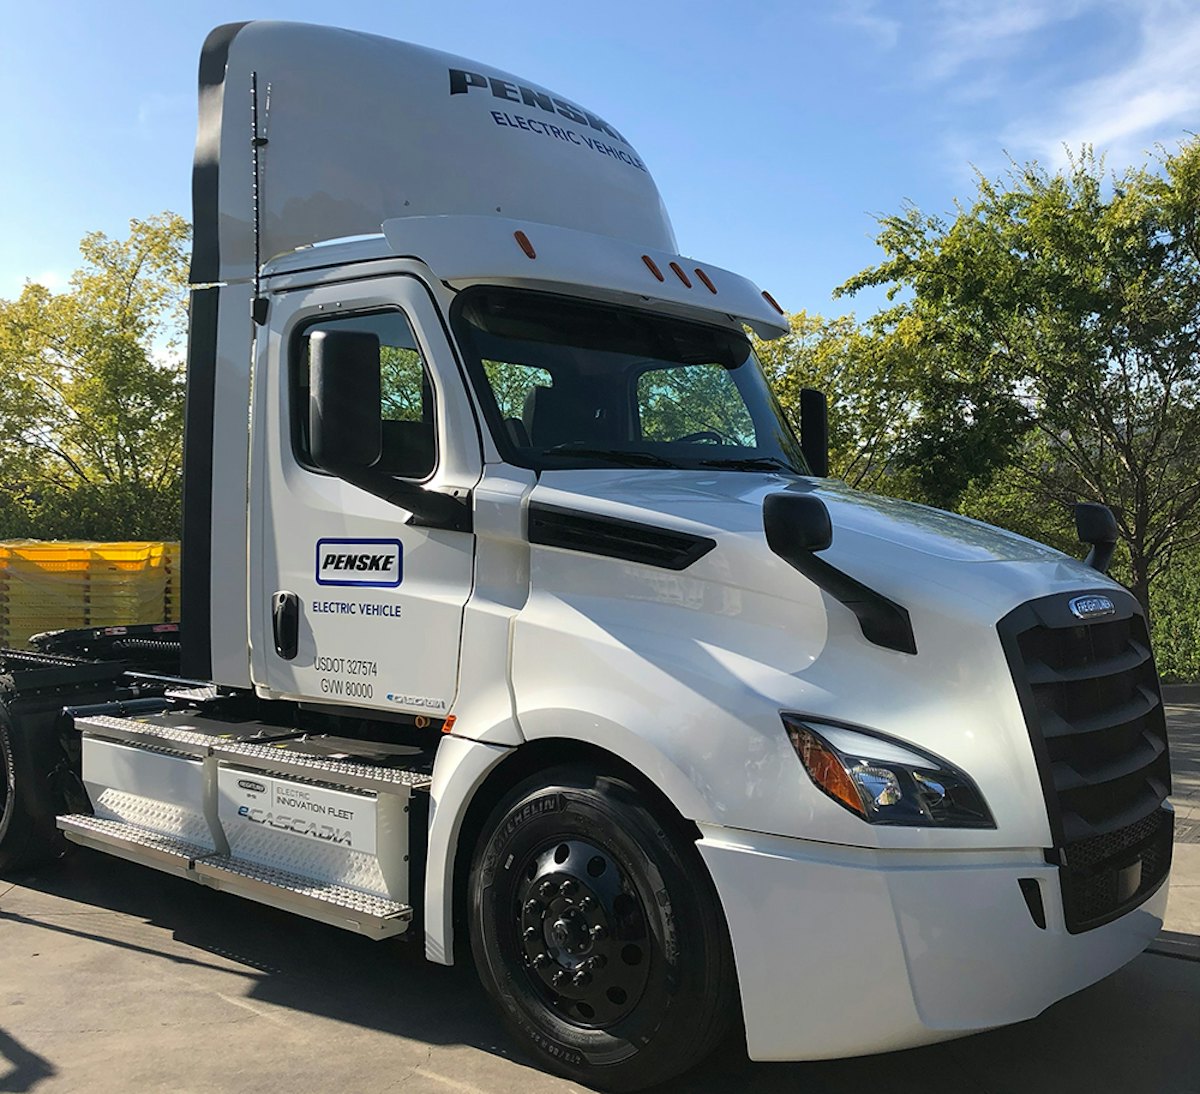 Penske takes delivery of electric Freightliner eCascadia semi trucks